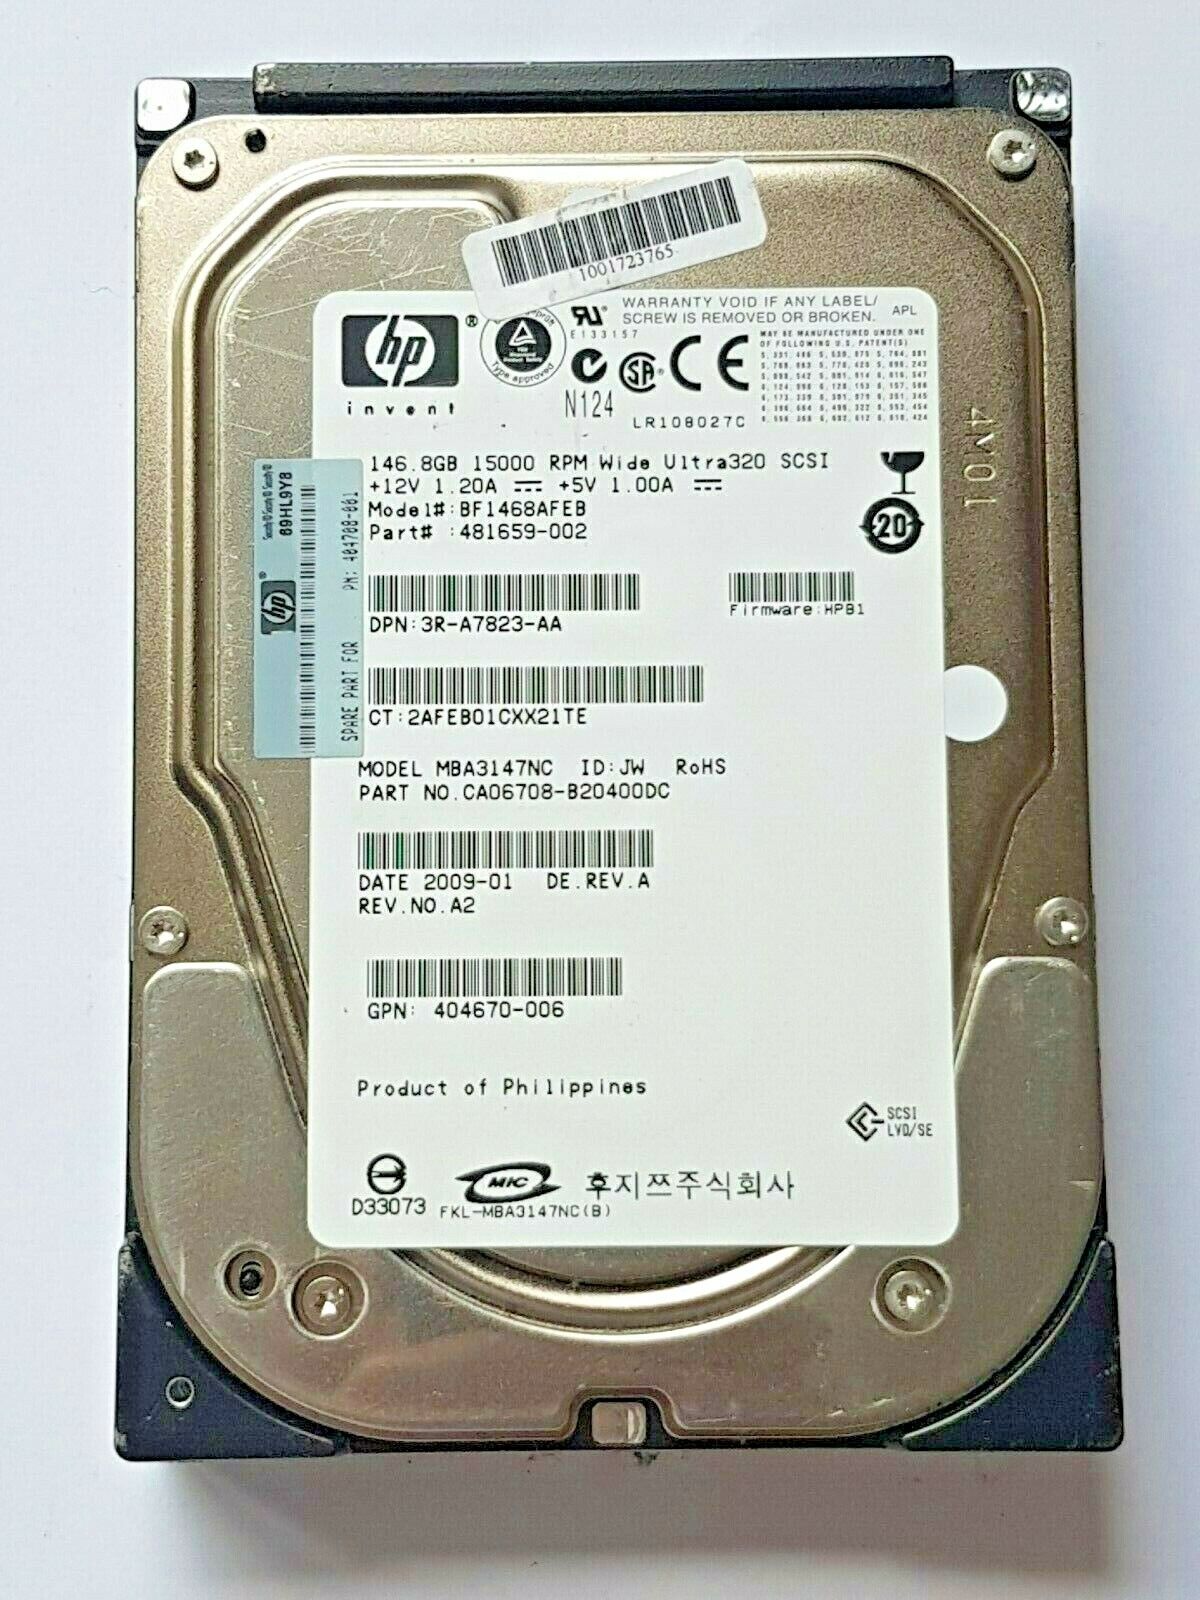 146.8 GB HP BF1468AFEB 15000 RPM Wide Ultra-320 SCSI HDD 80-pin 3.5 \